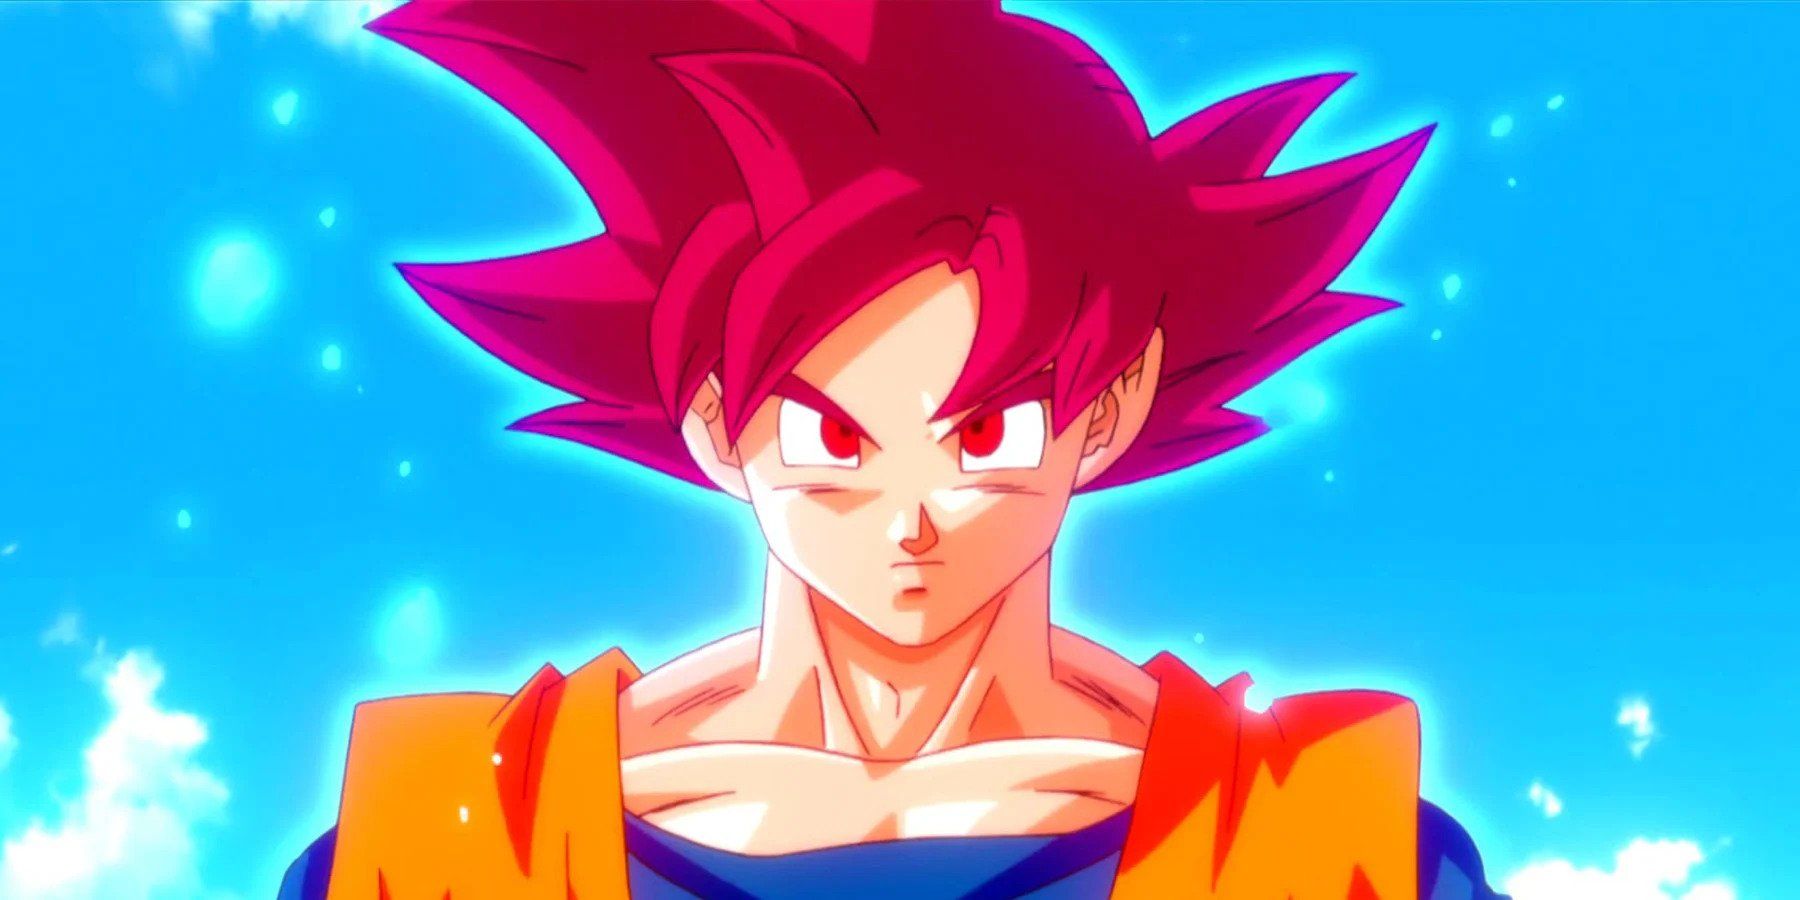 Hype on X: Super Saiyan Blue Goku Kaioken new illustration by